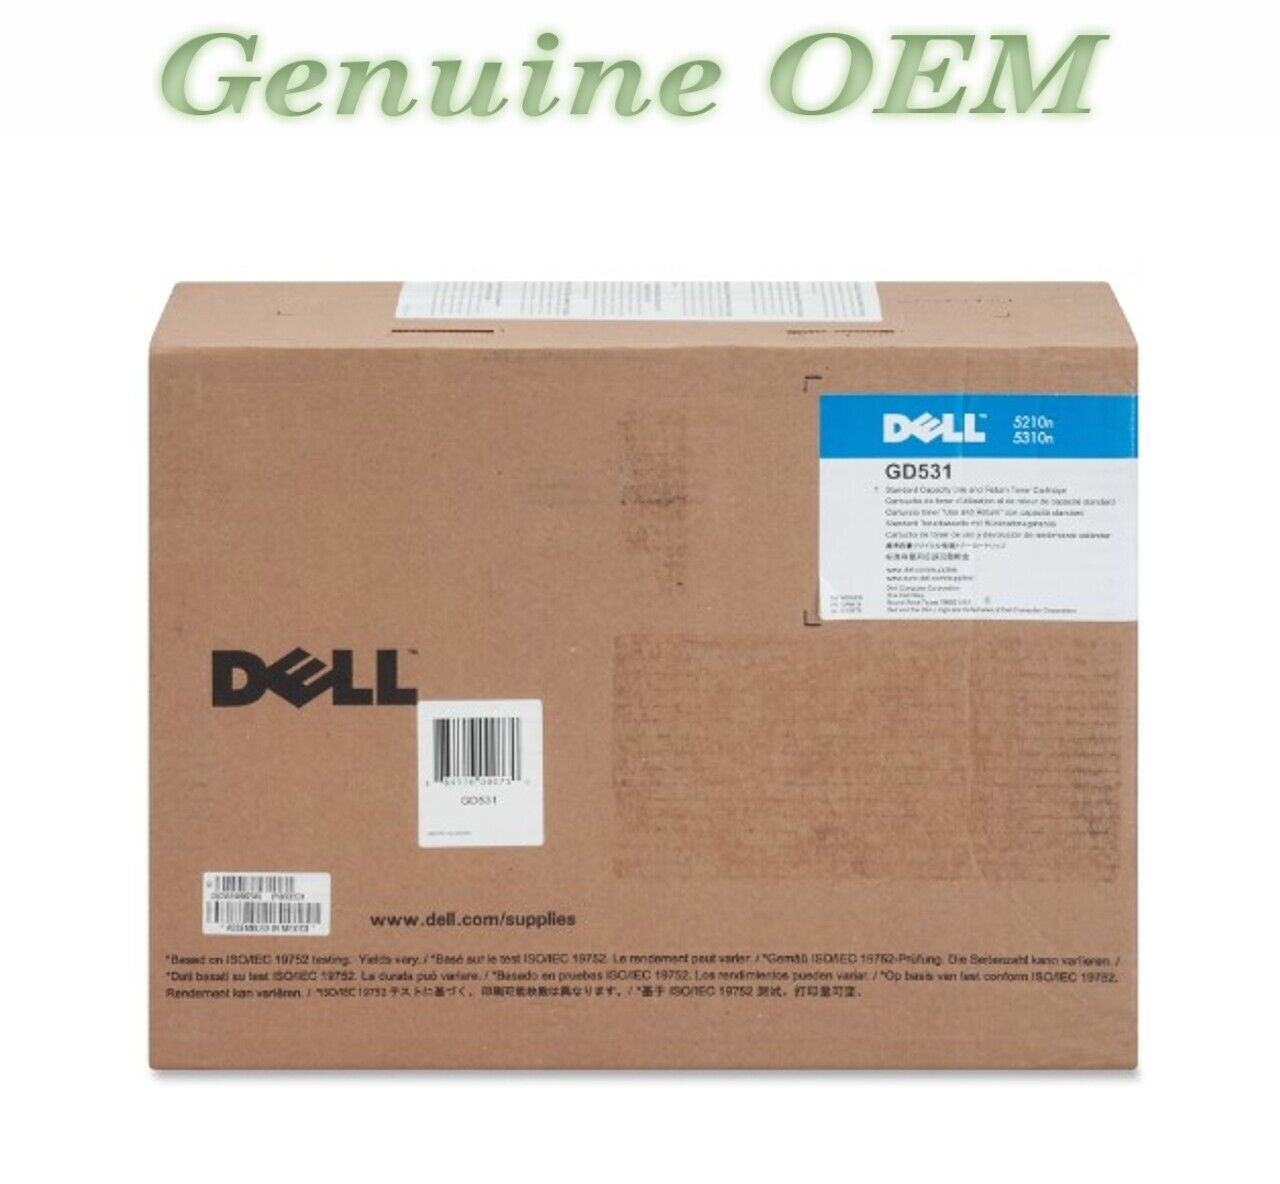 GD531 Original OEM Dell Toner Cartridge, Black Genuine Sealed